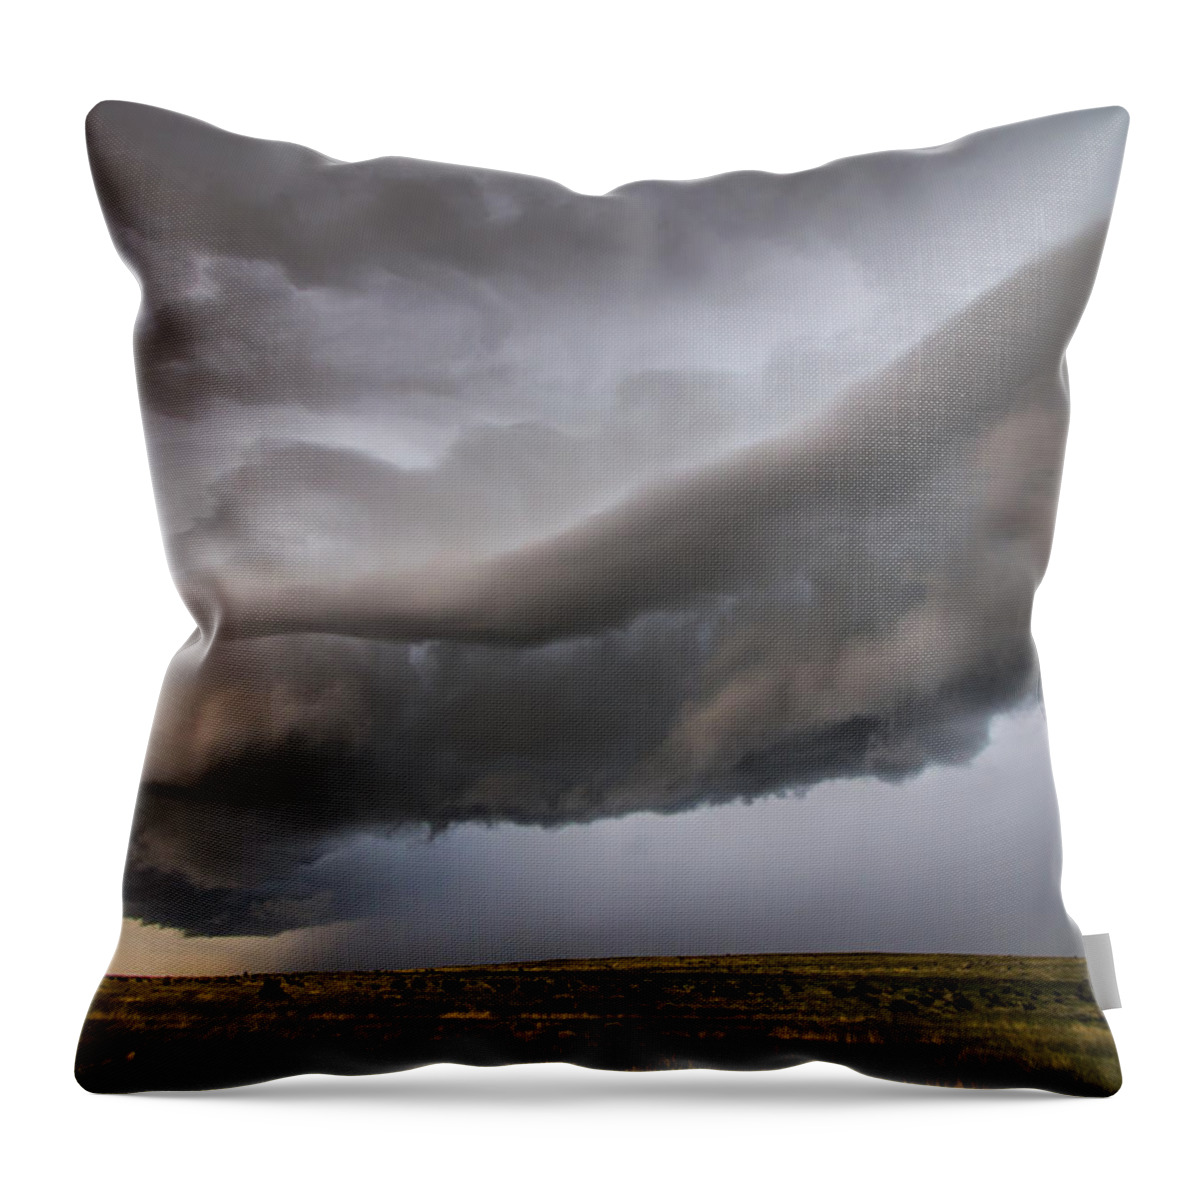 Huerfano Throw Pillow featuring the photograph Huerfano Shelf Cloud by Lena Sandoval-Stockley